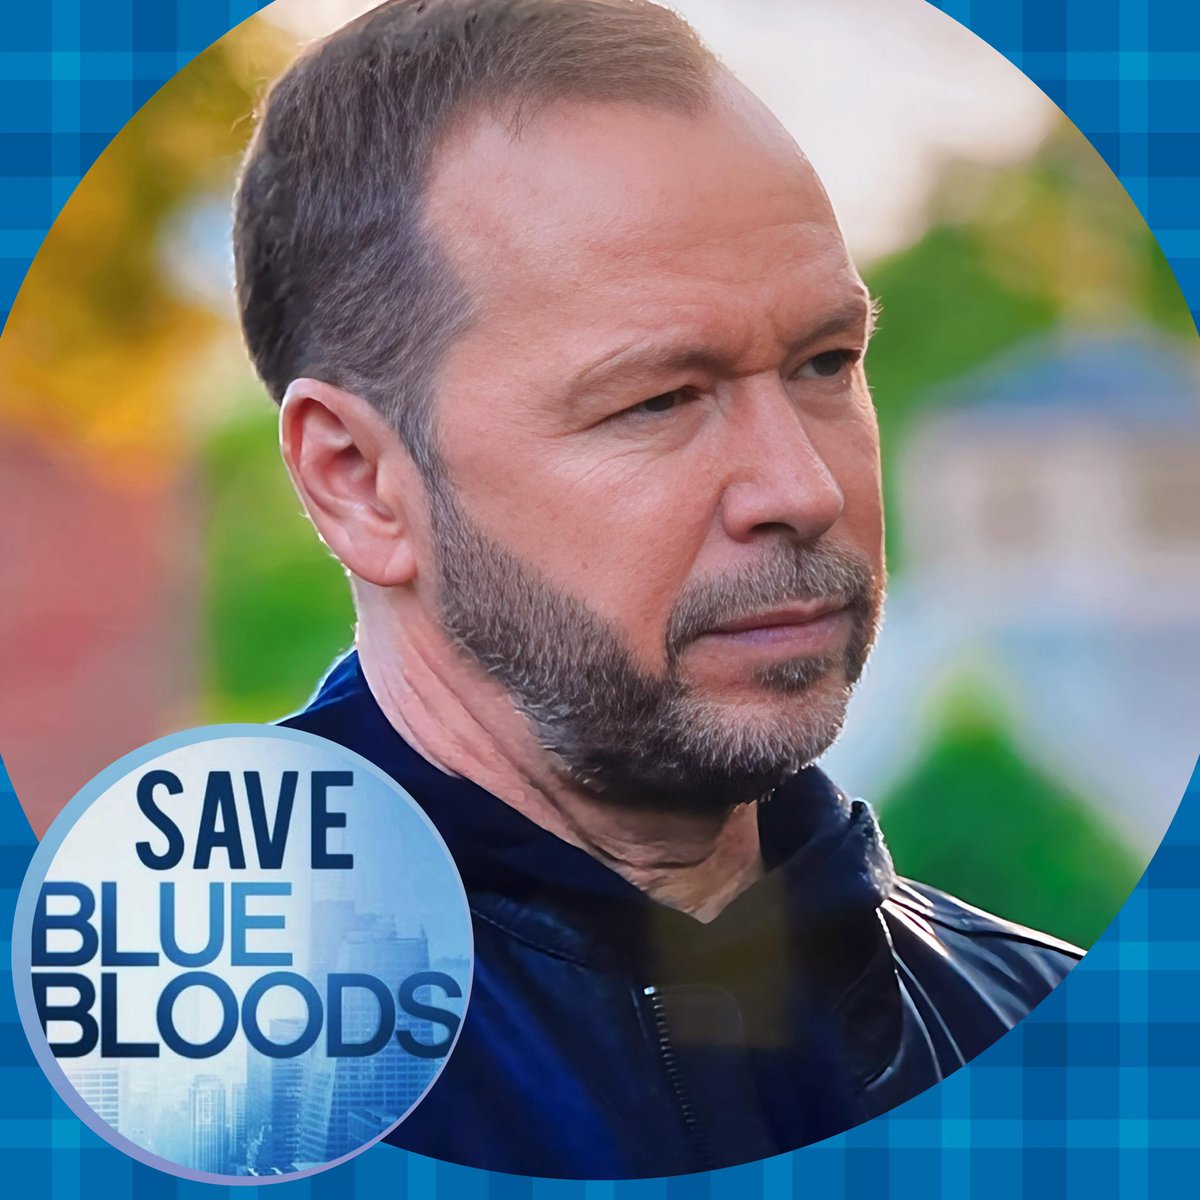 My fav show with my fav guy @DonnieWahlberg ❤️💙 #SaveBlueBloods #BlueBloods